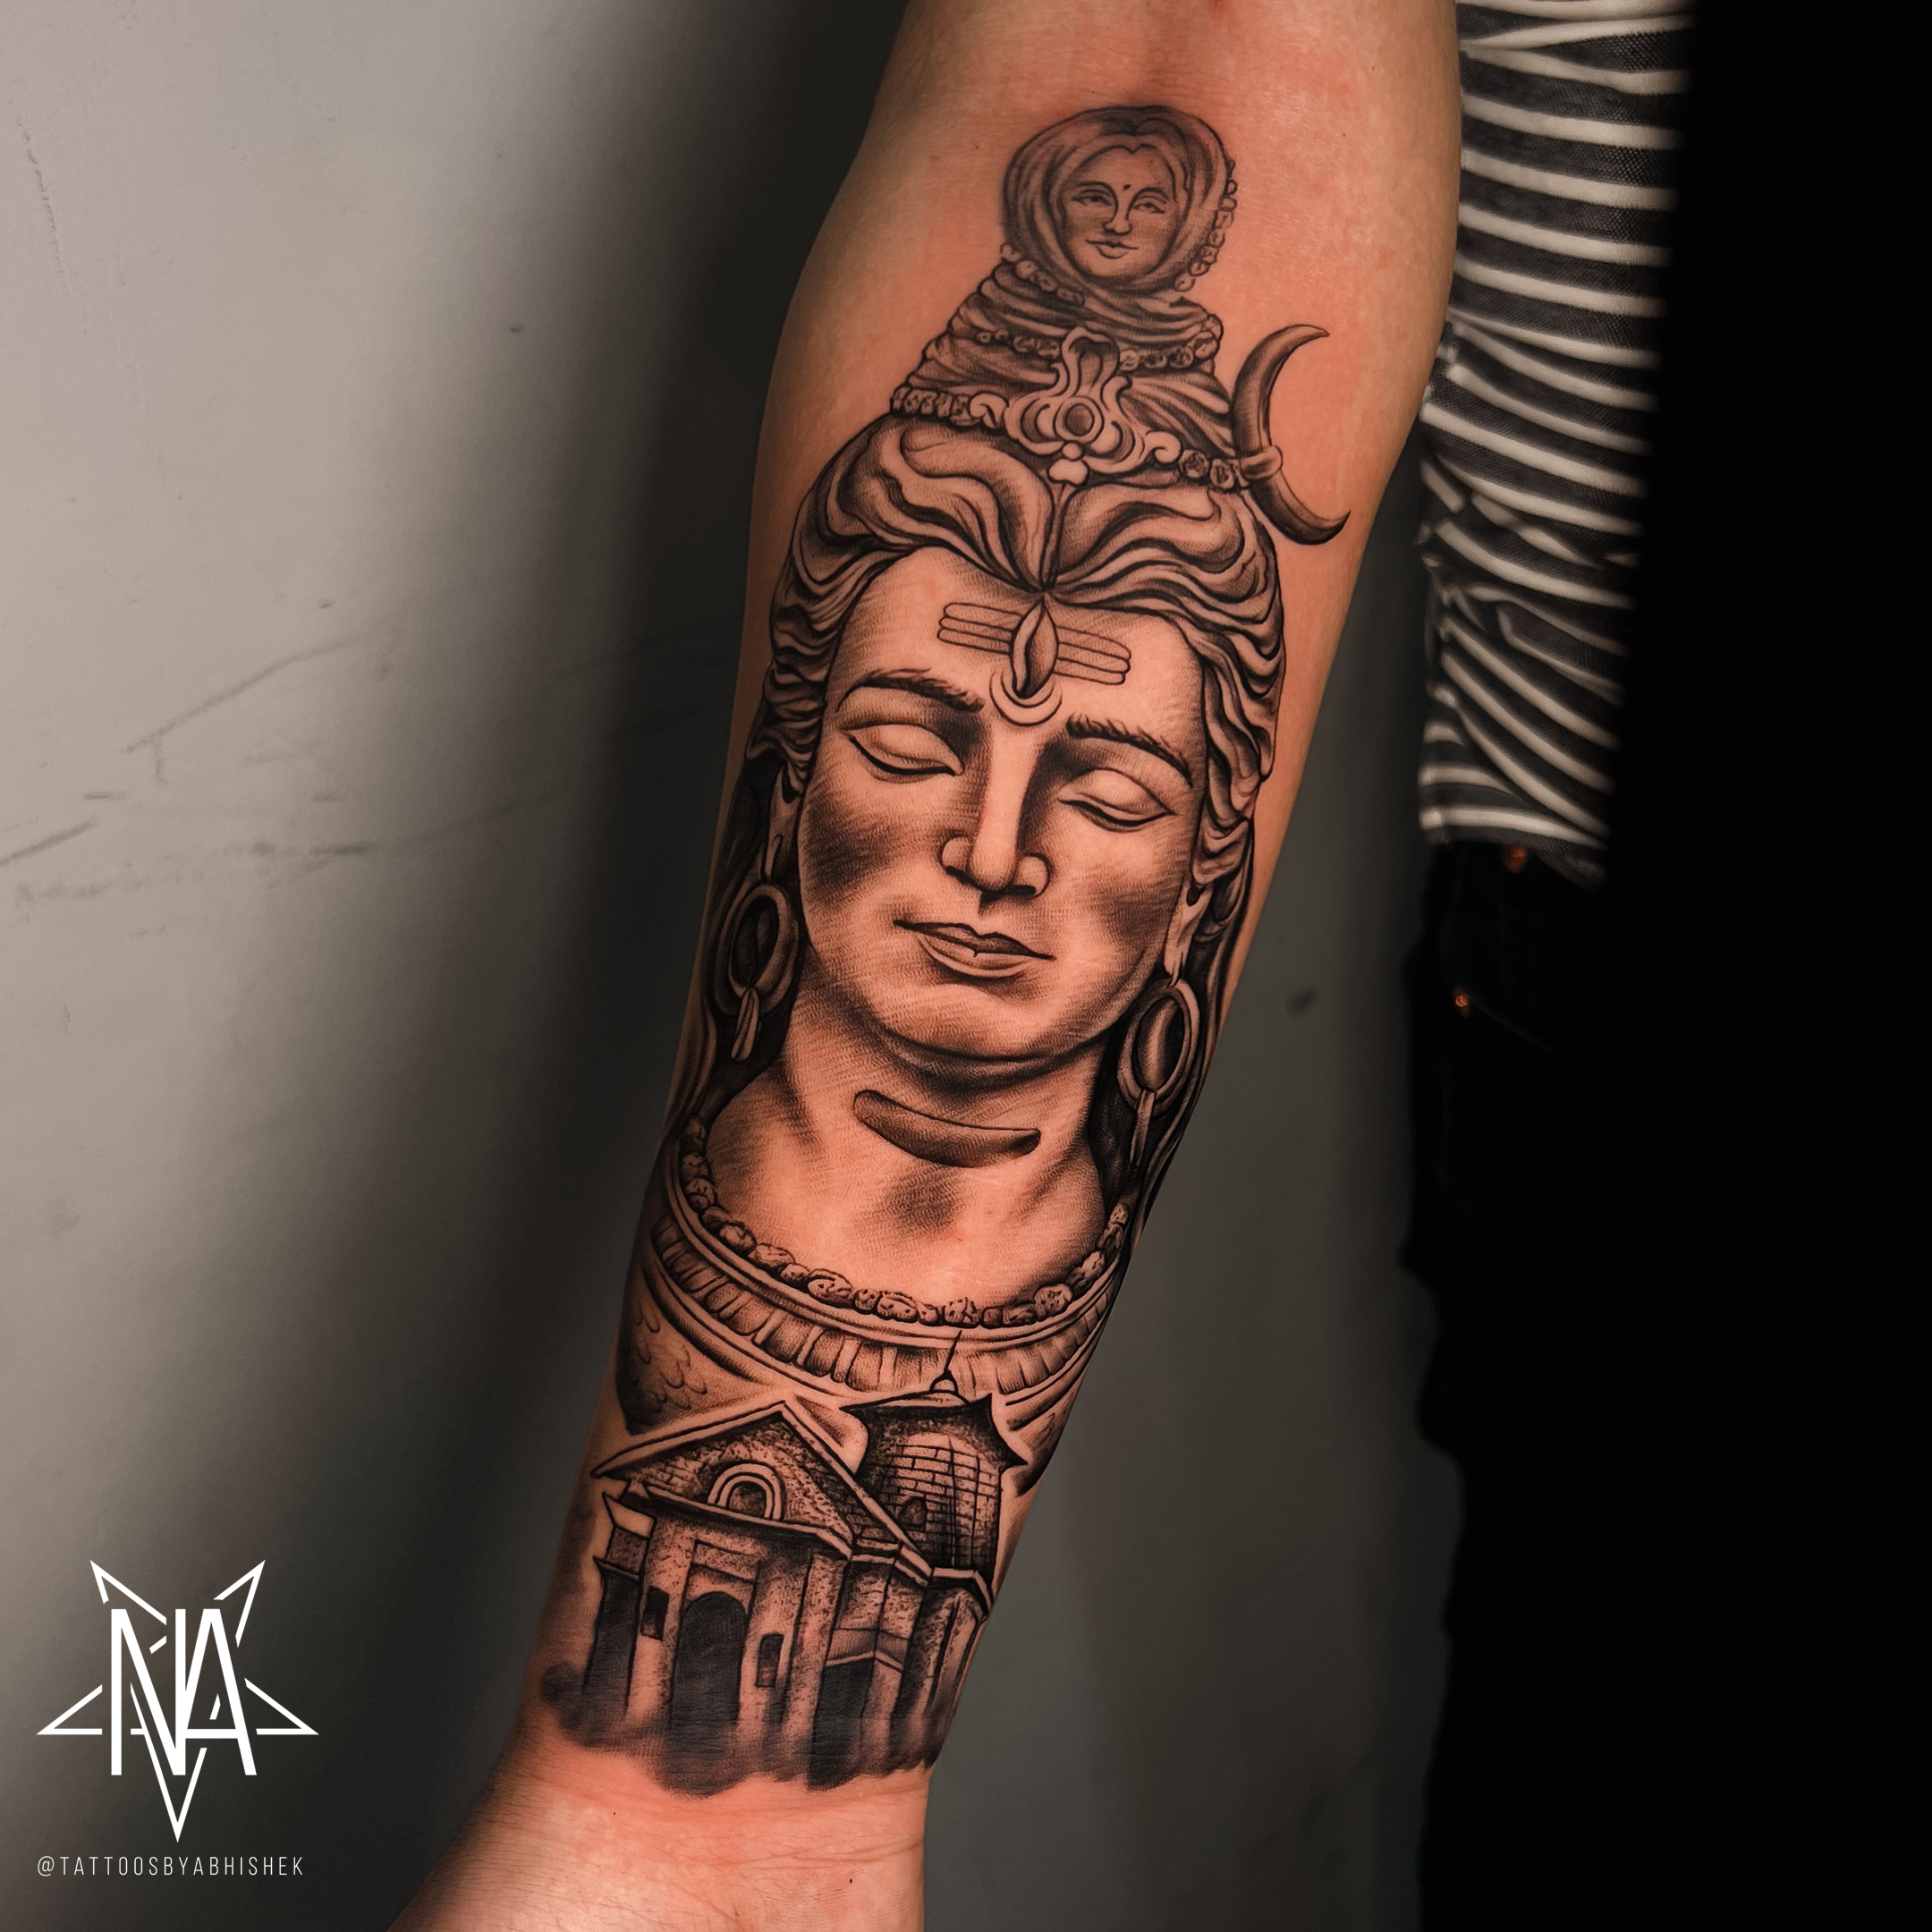 Shiva Tattoo with Trishul, Snake & Shiva Third Eye - Black Poison Tattoos